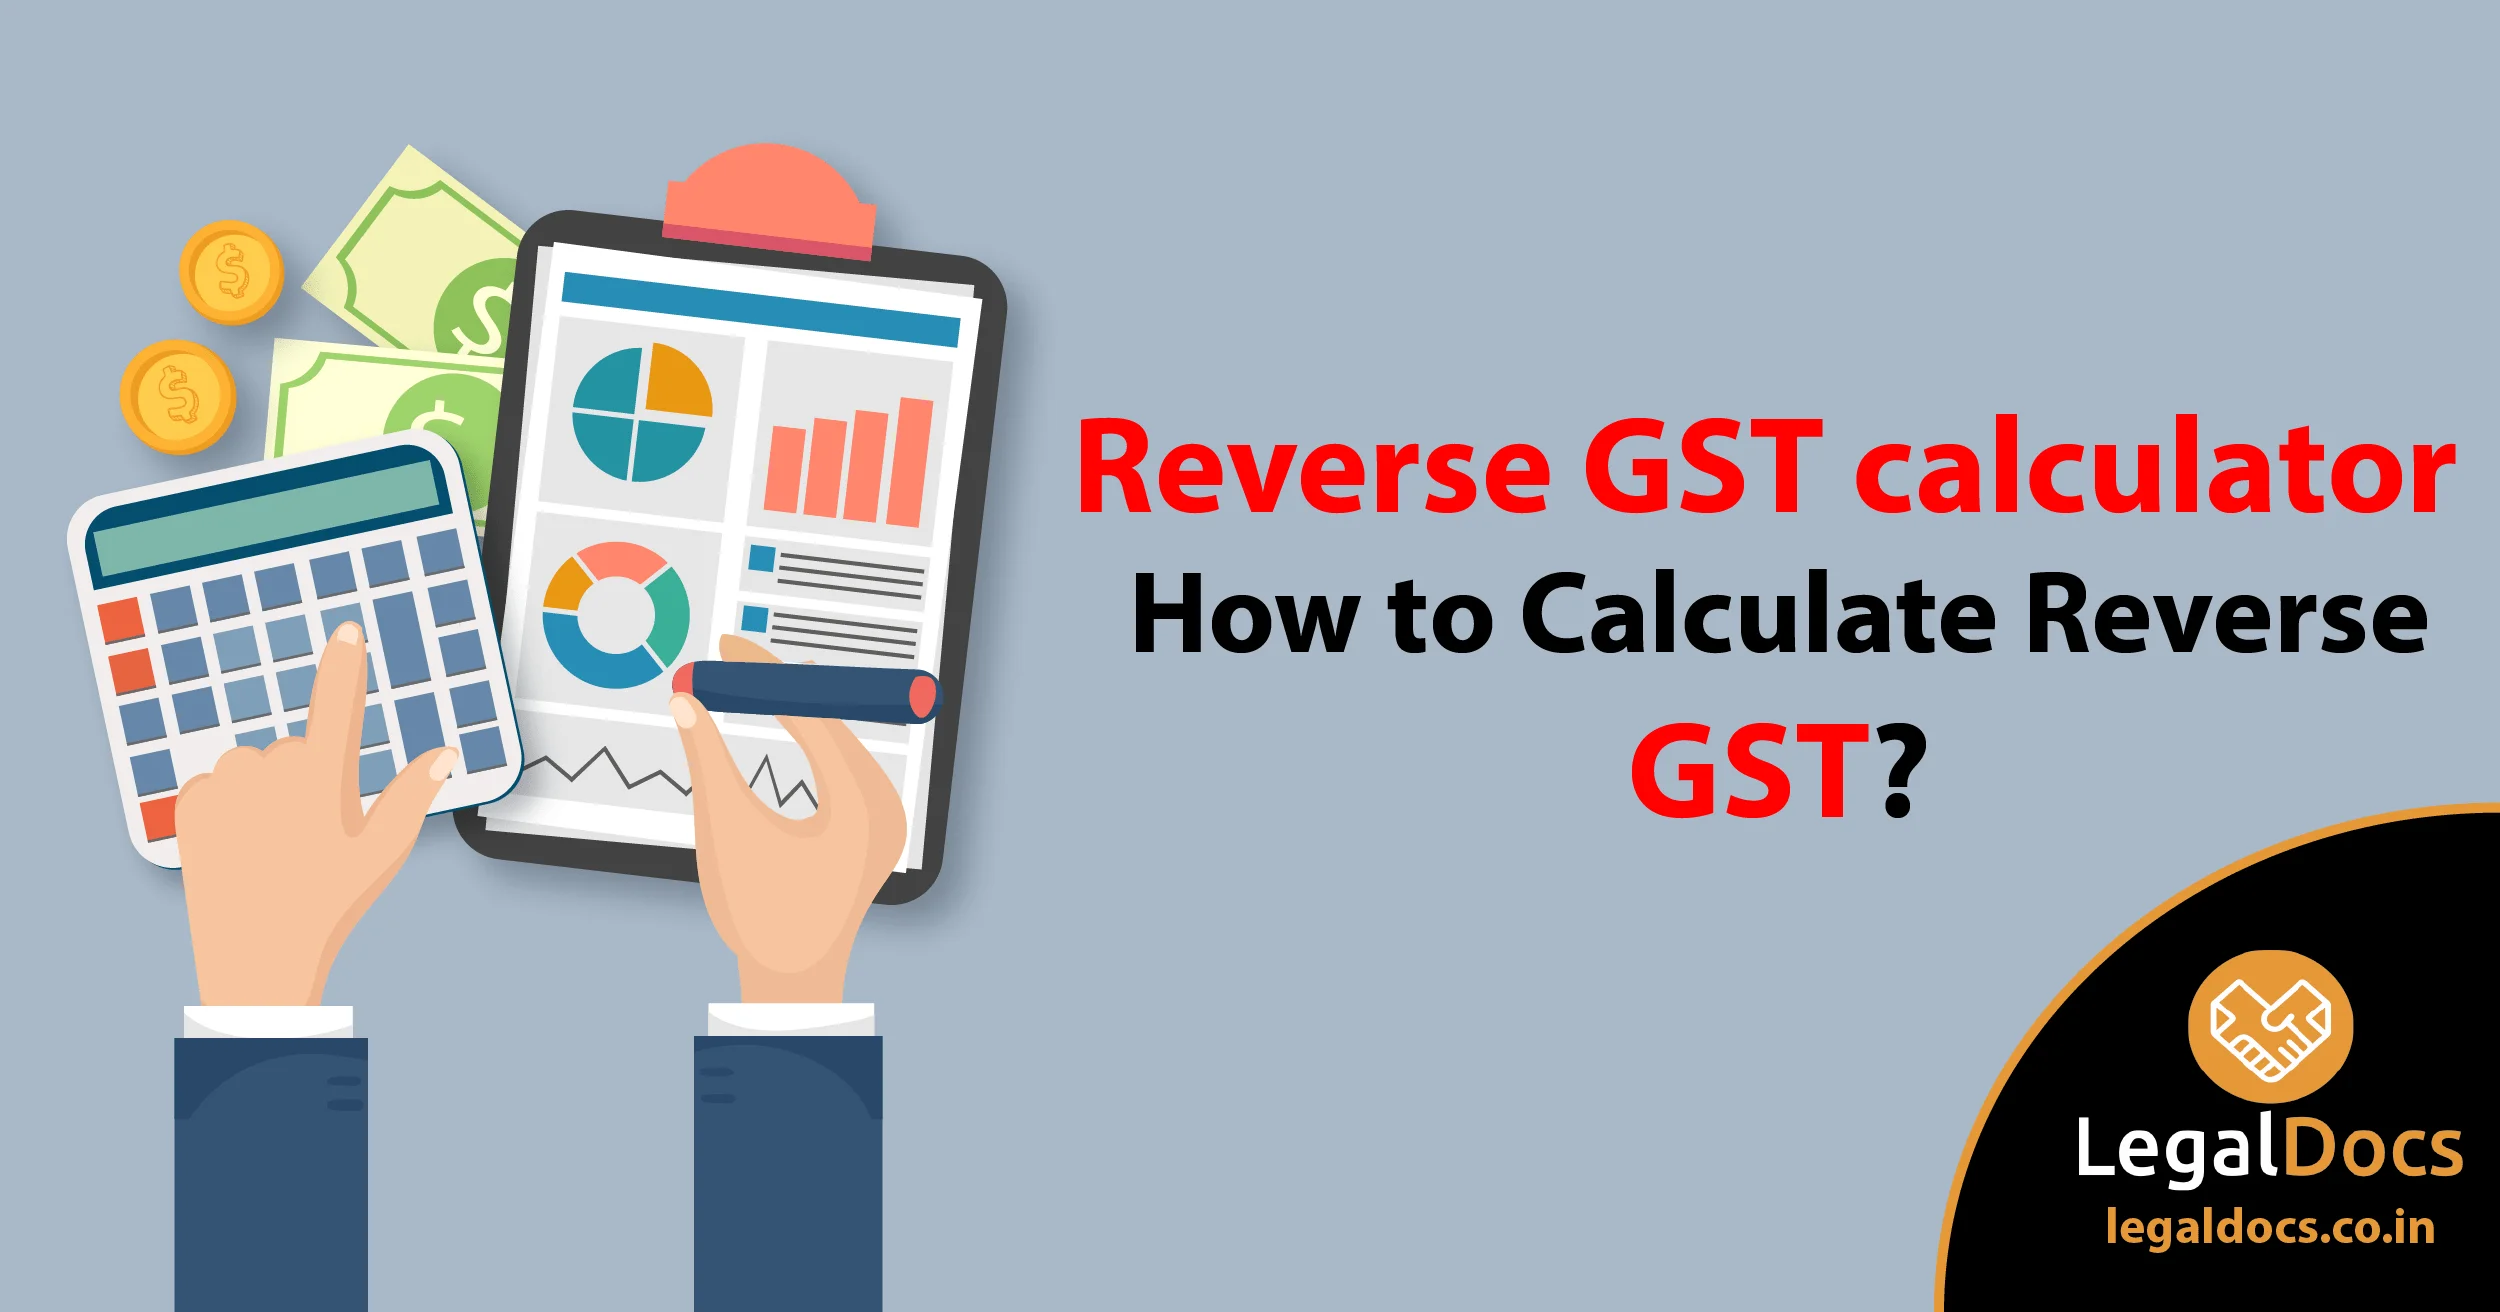 Reverse GST Calculator - How to Calculate Reverse GST? - LegalDocs